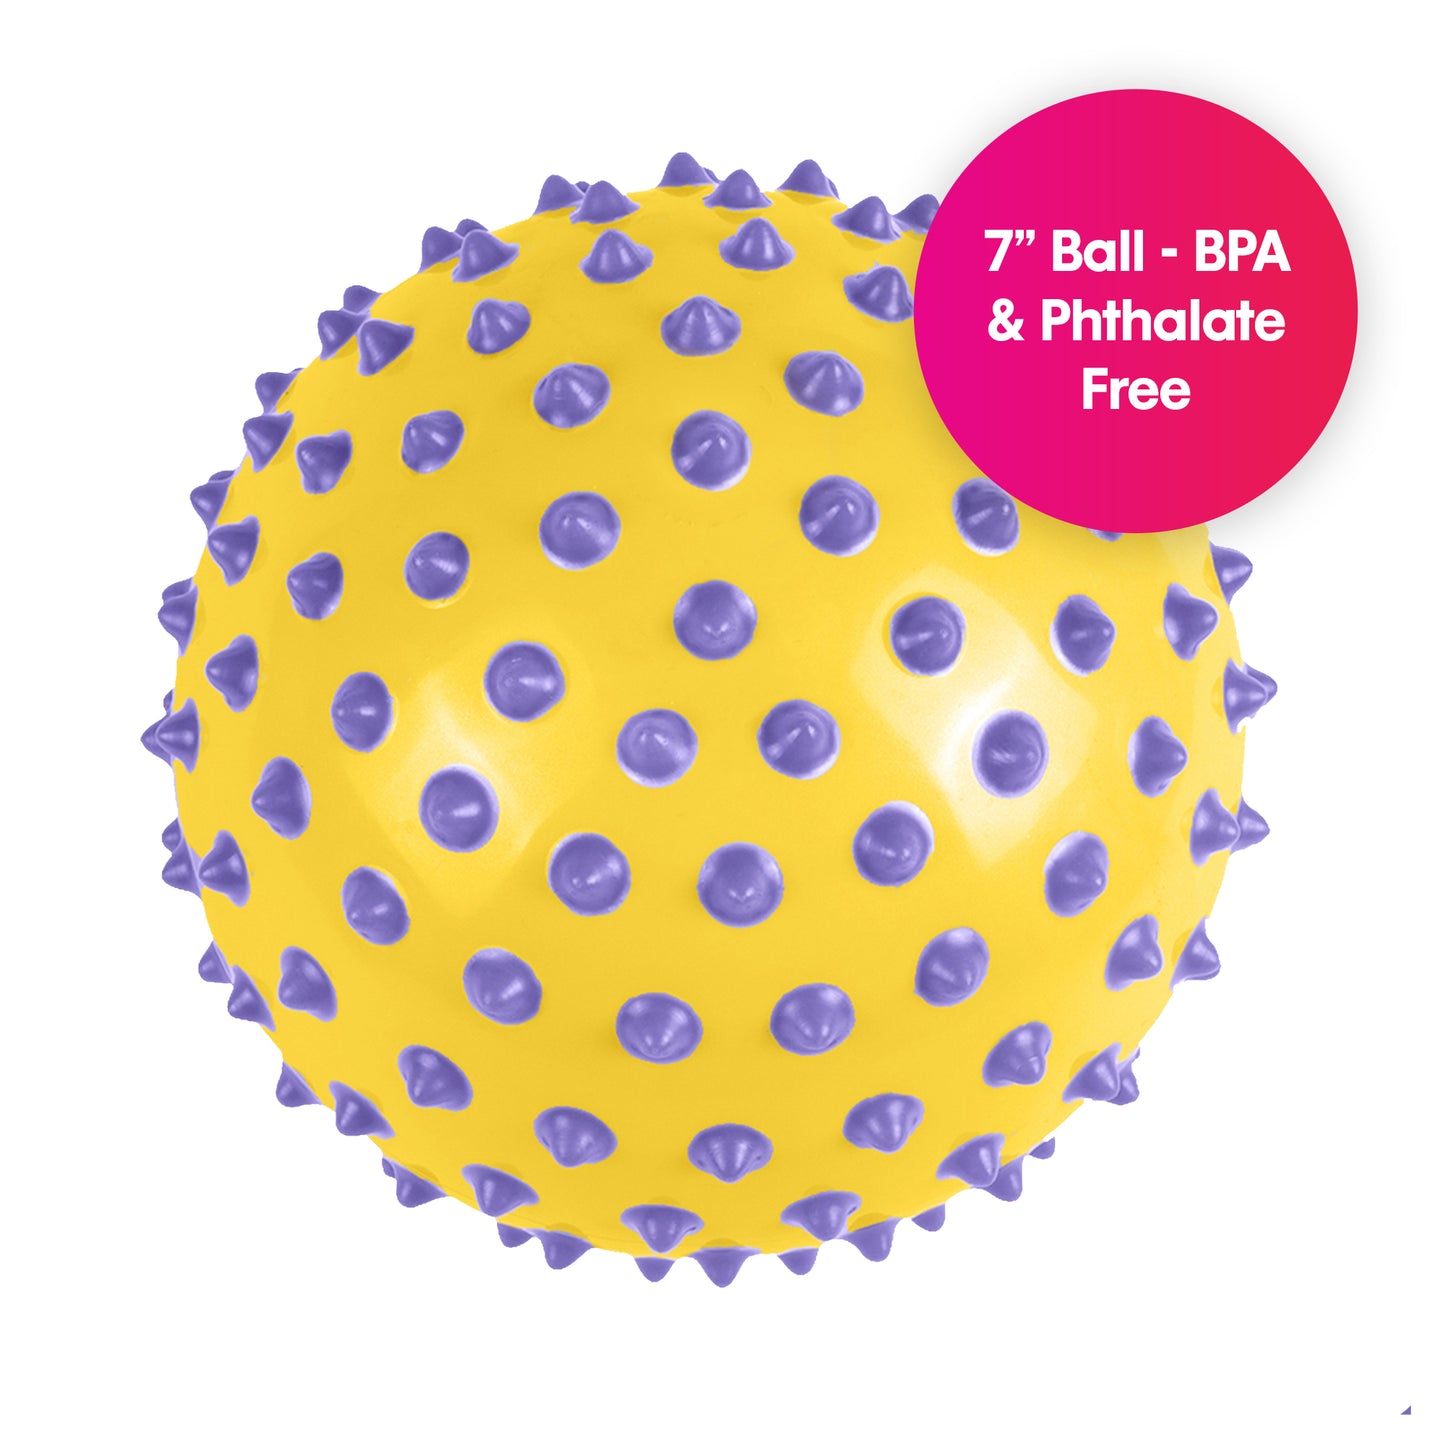 The Original Sensory Ball, Color Dots (Yellow & Purple)